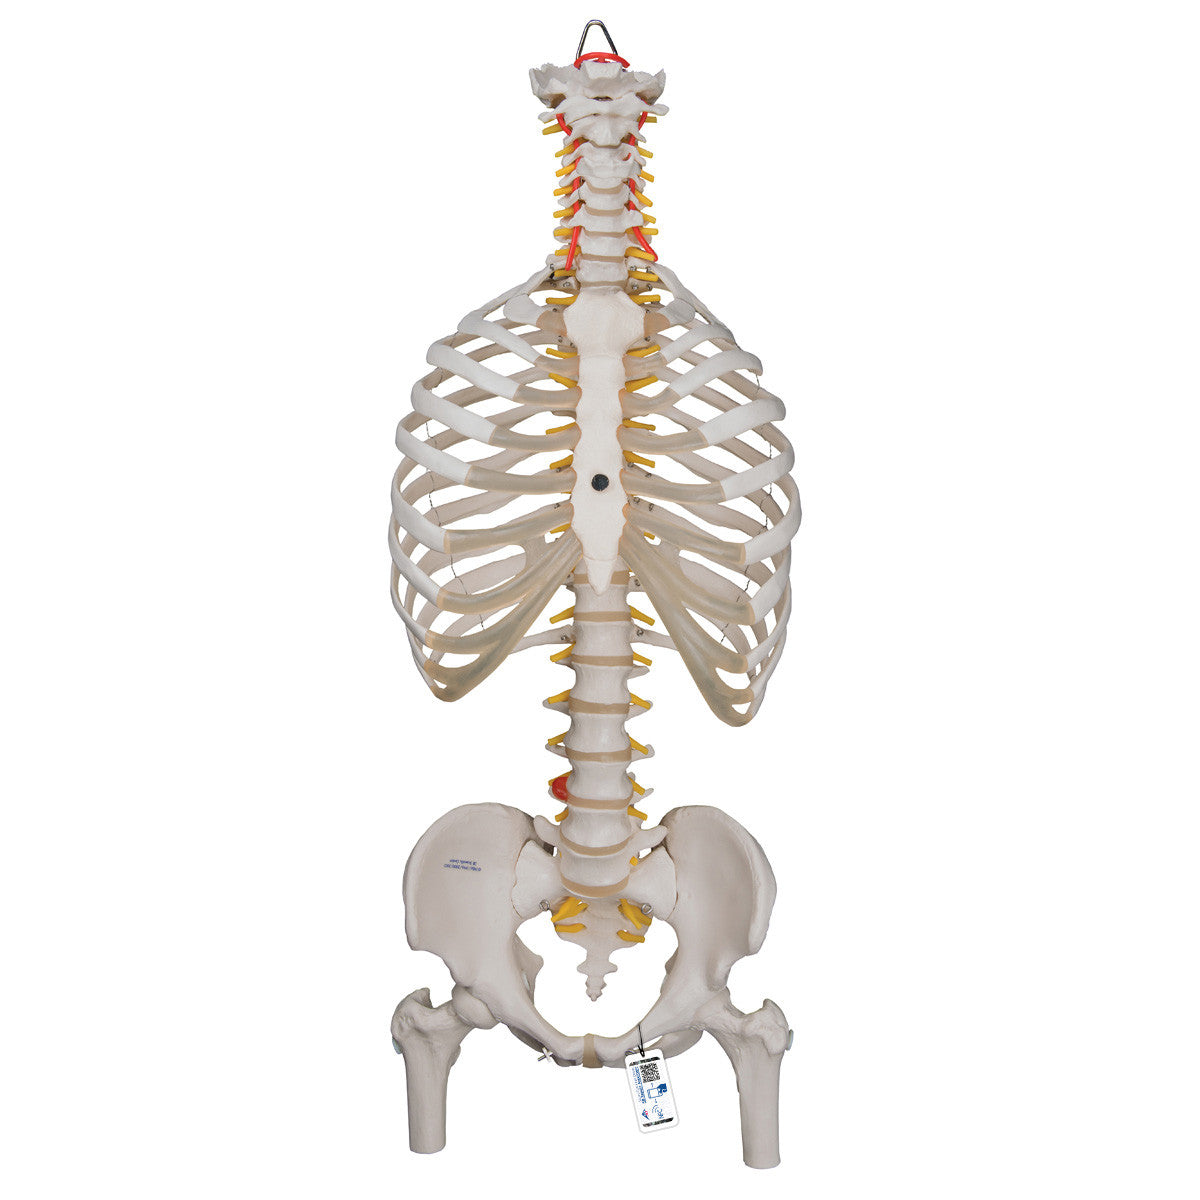 a56-2_01_1200_1200_classic-flexible-human-spine-model-with-ribs-femur-heads-3b-smart-anatomy__69551.1589753248.1280.1280.jpg